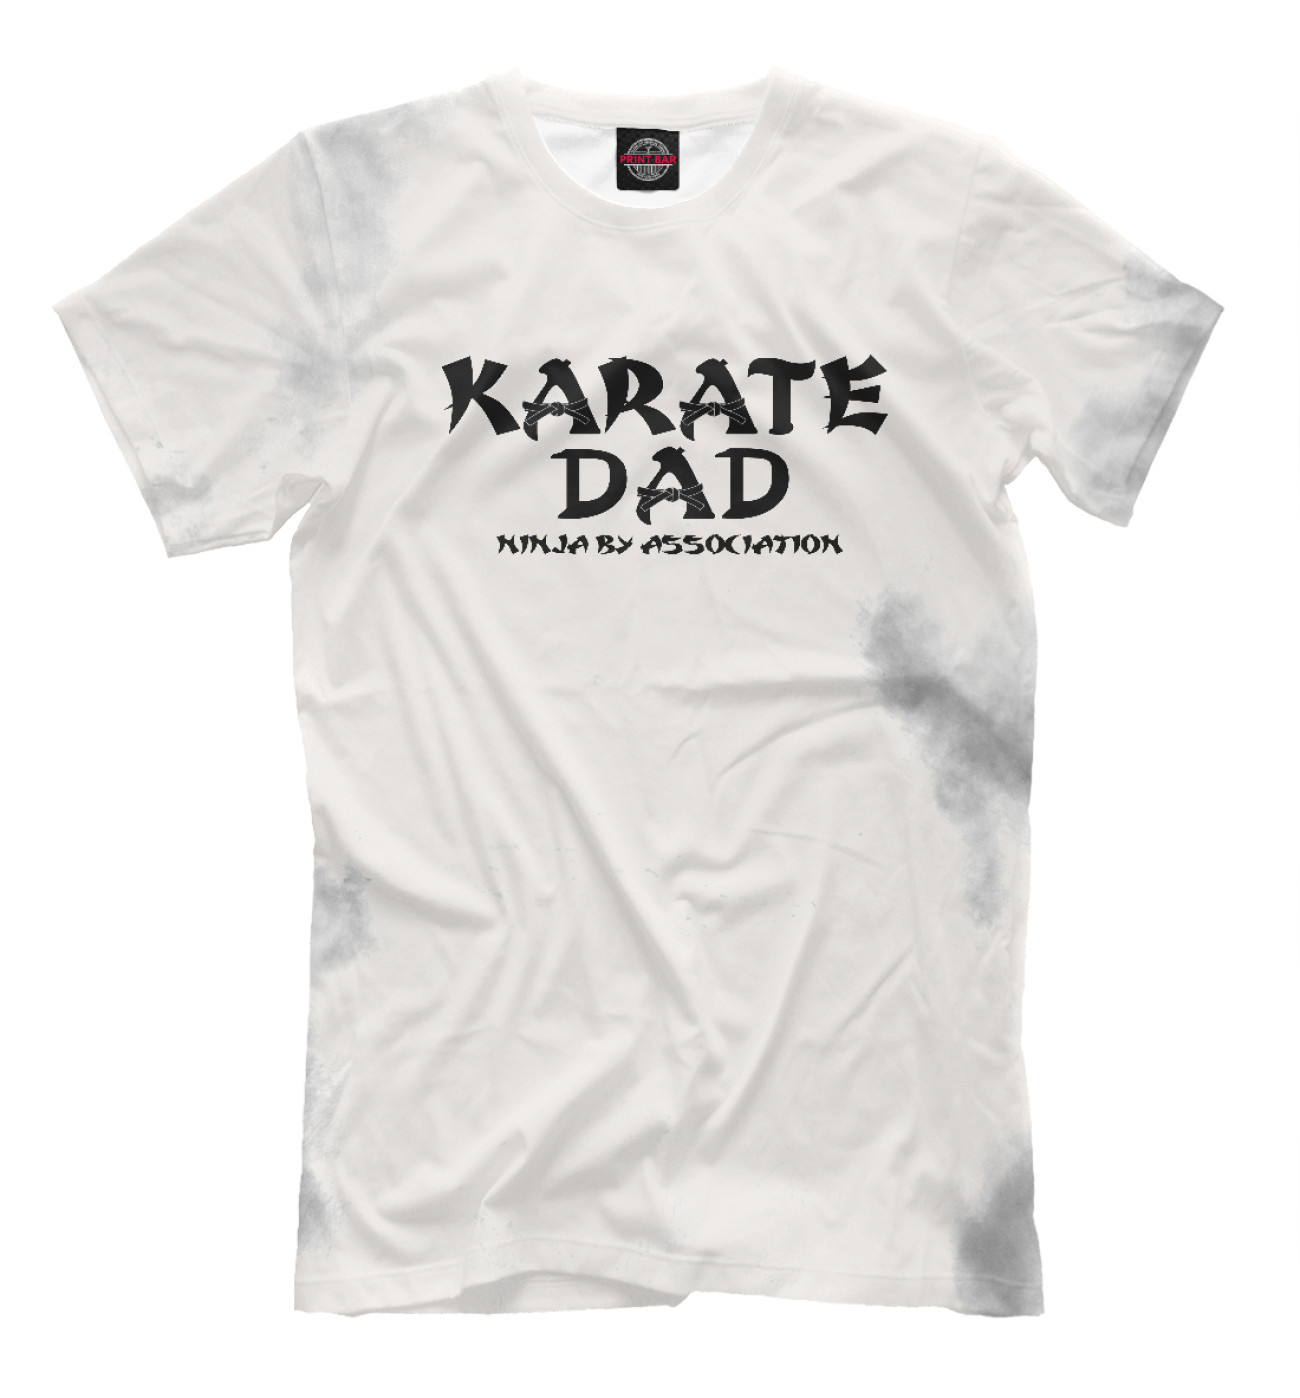 Мужская Футболка Karate Dad Tee, артикул: KRT-777269-fut-2